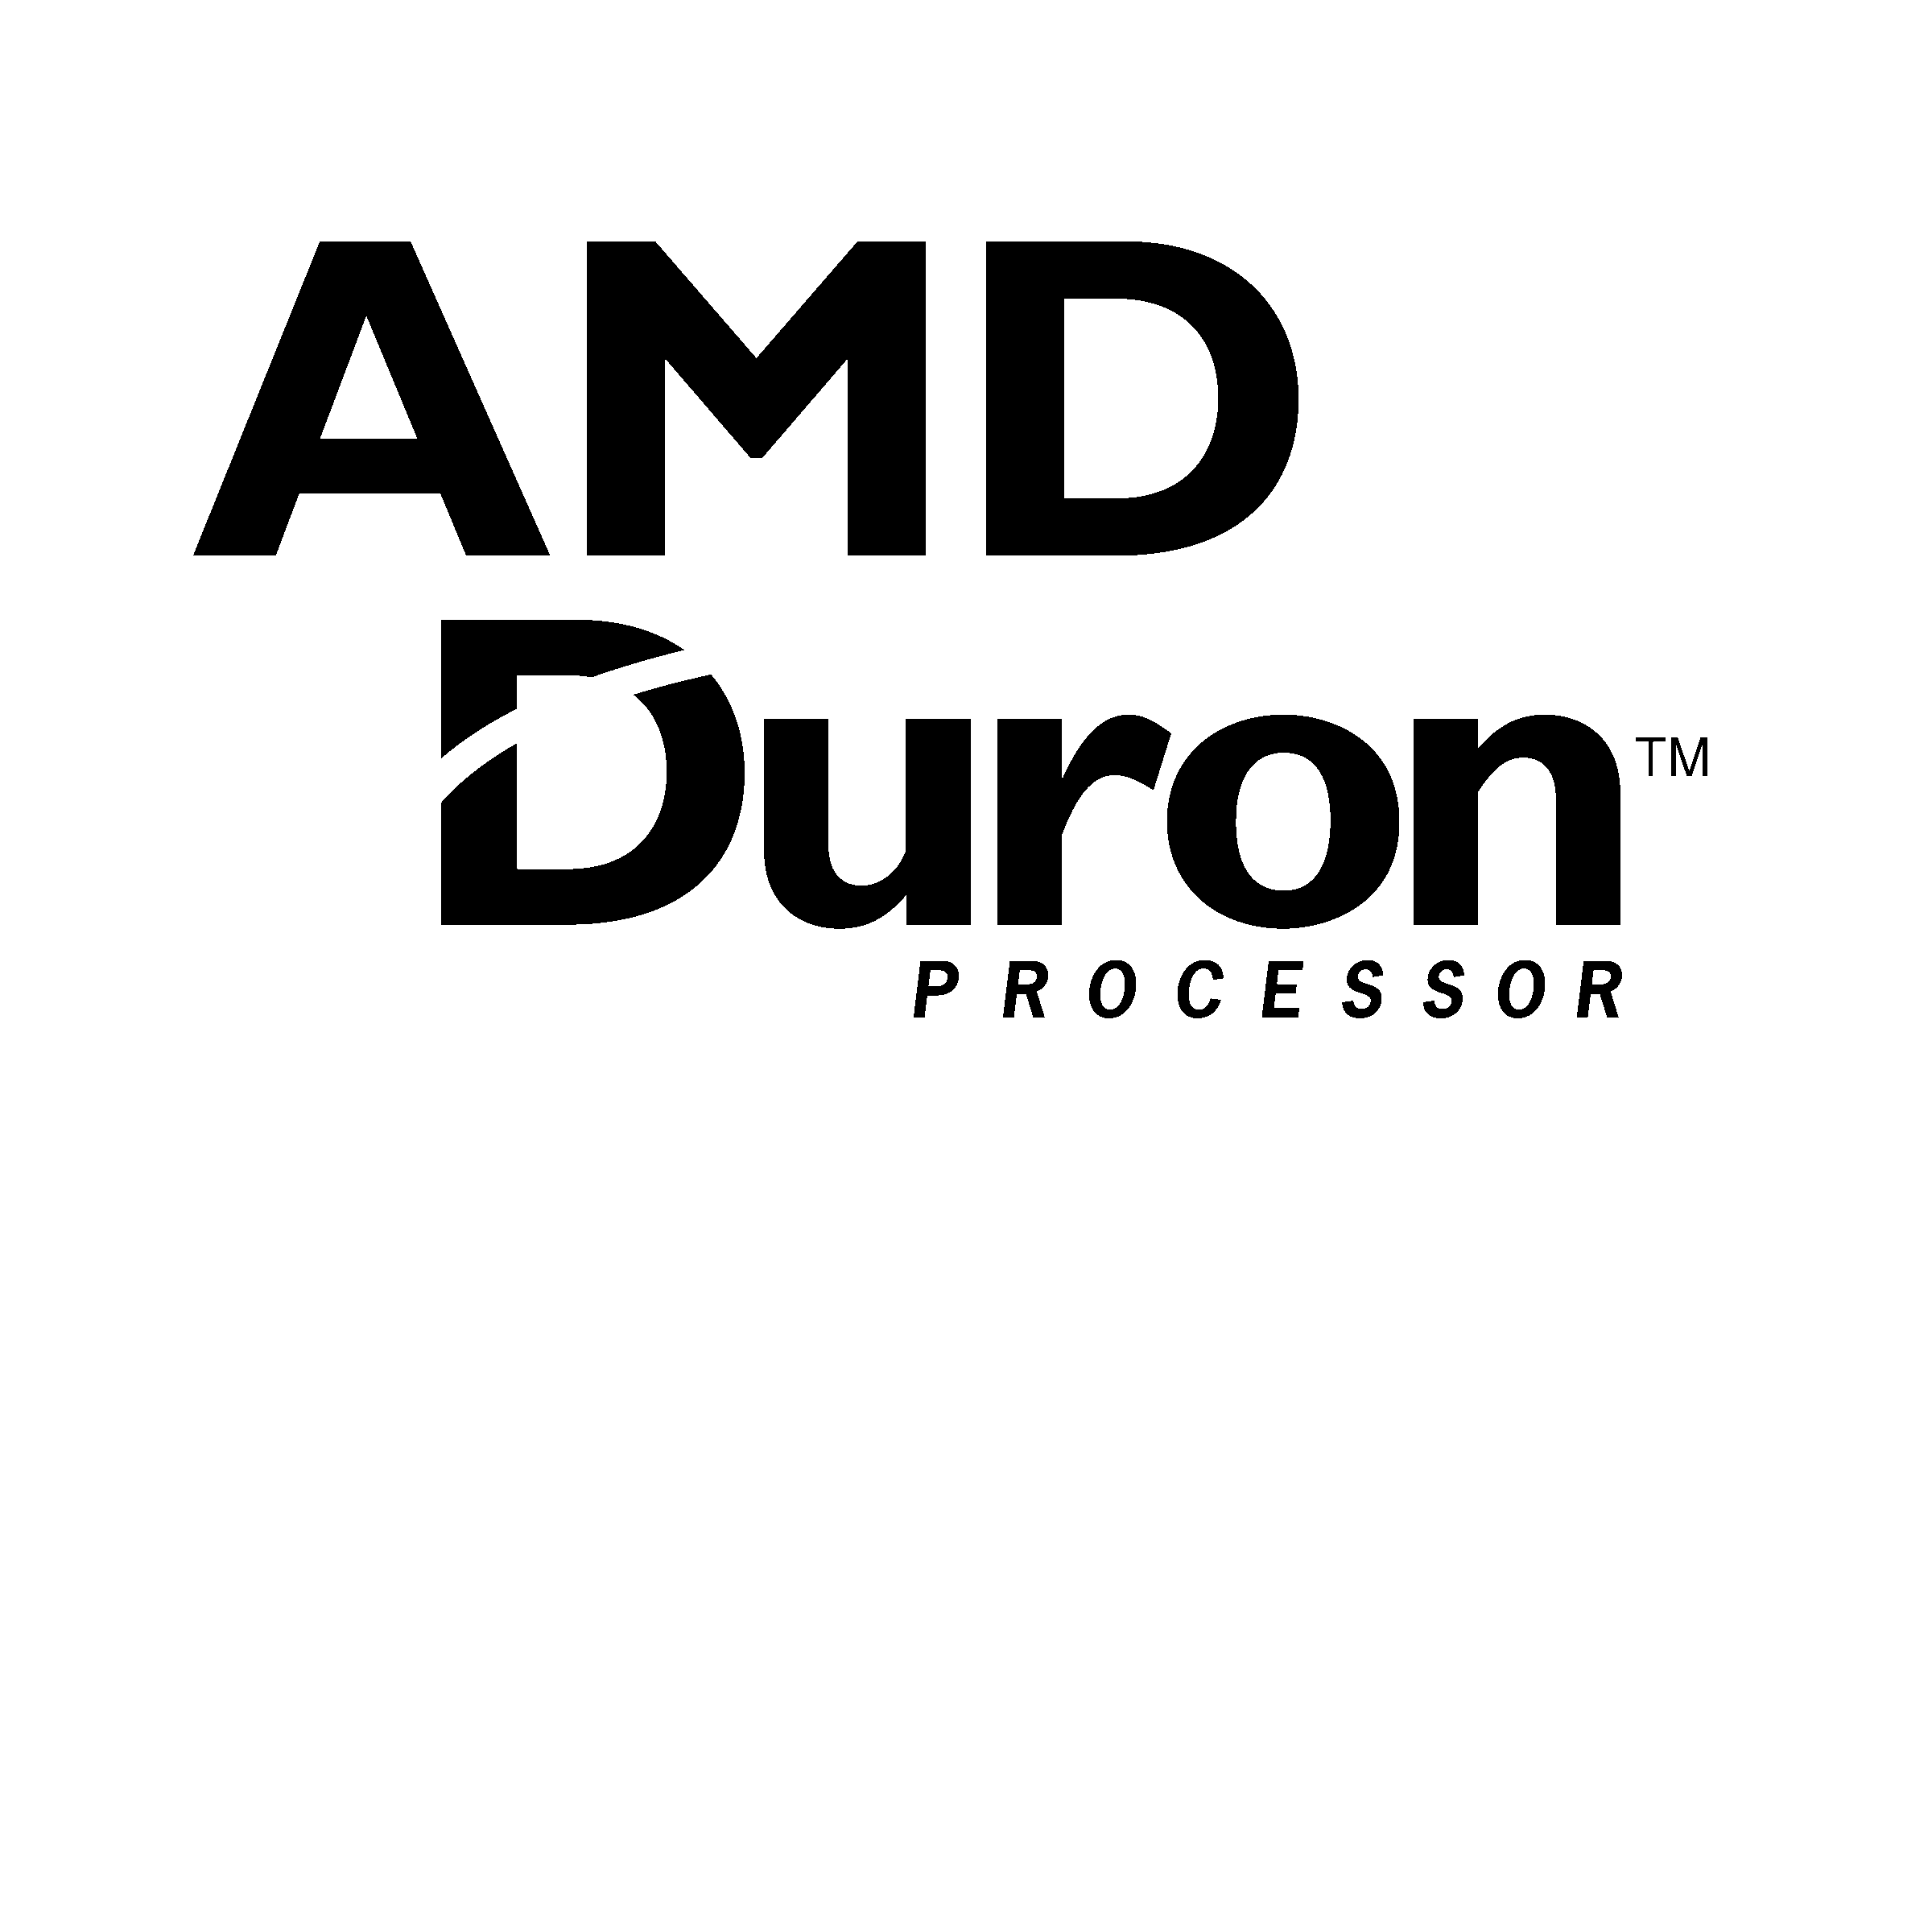 Processor Logo - AMD Duron Processor Logo PNG Transparent & SVG Vector - Freebie Supply